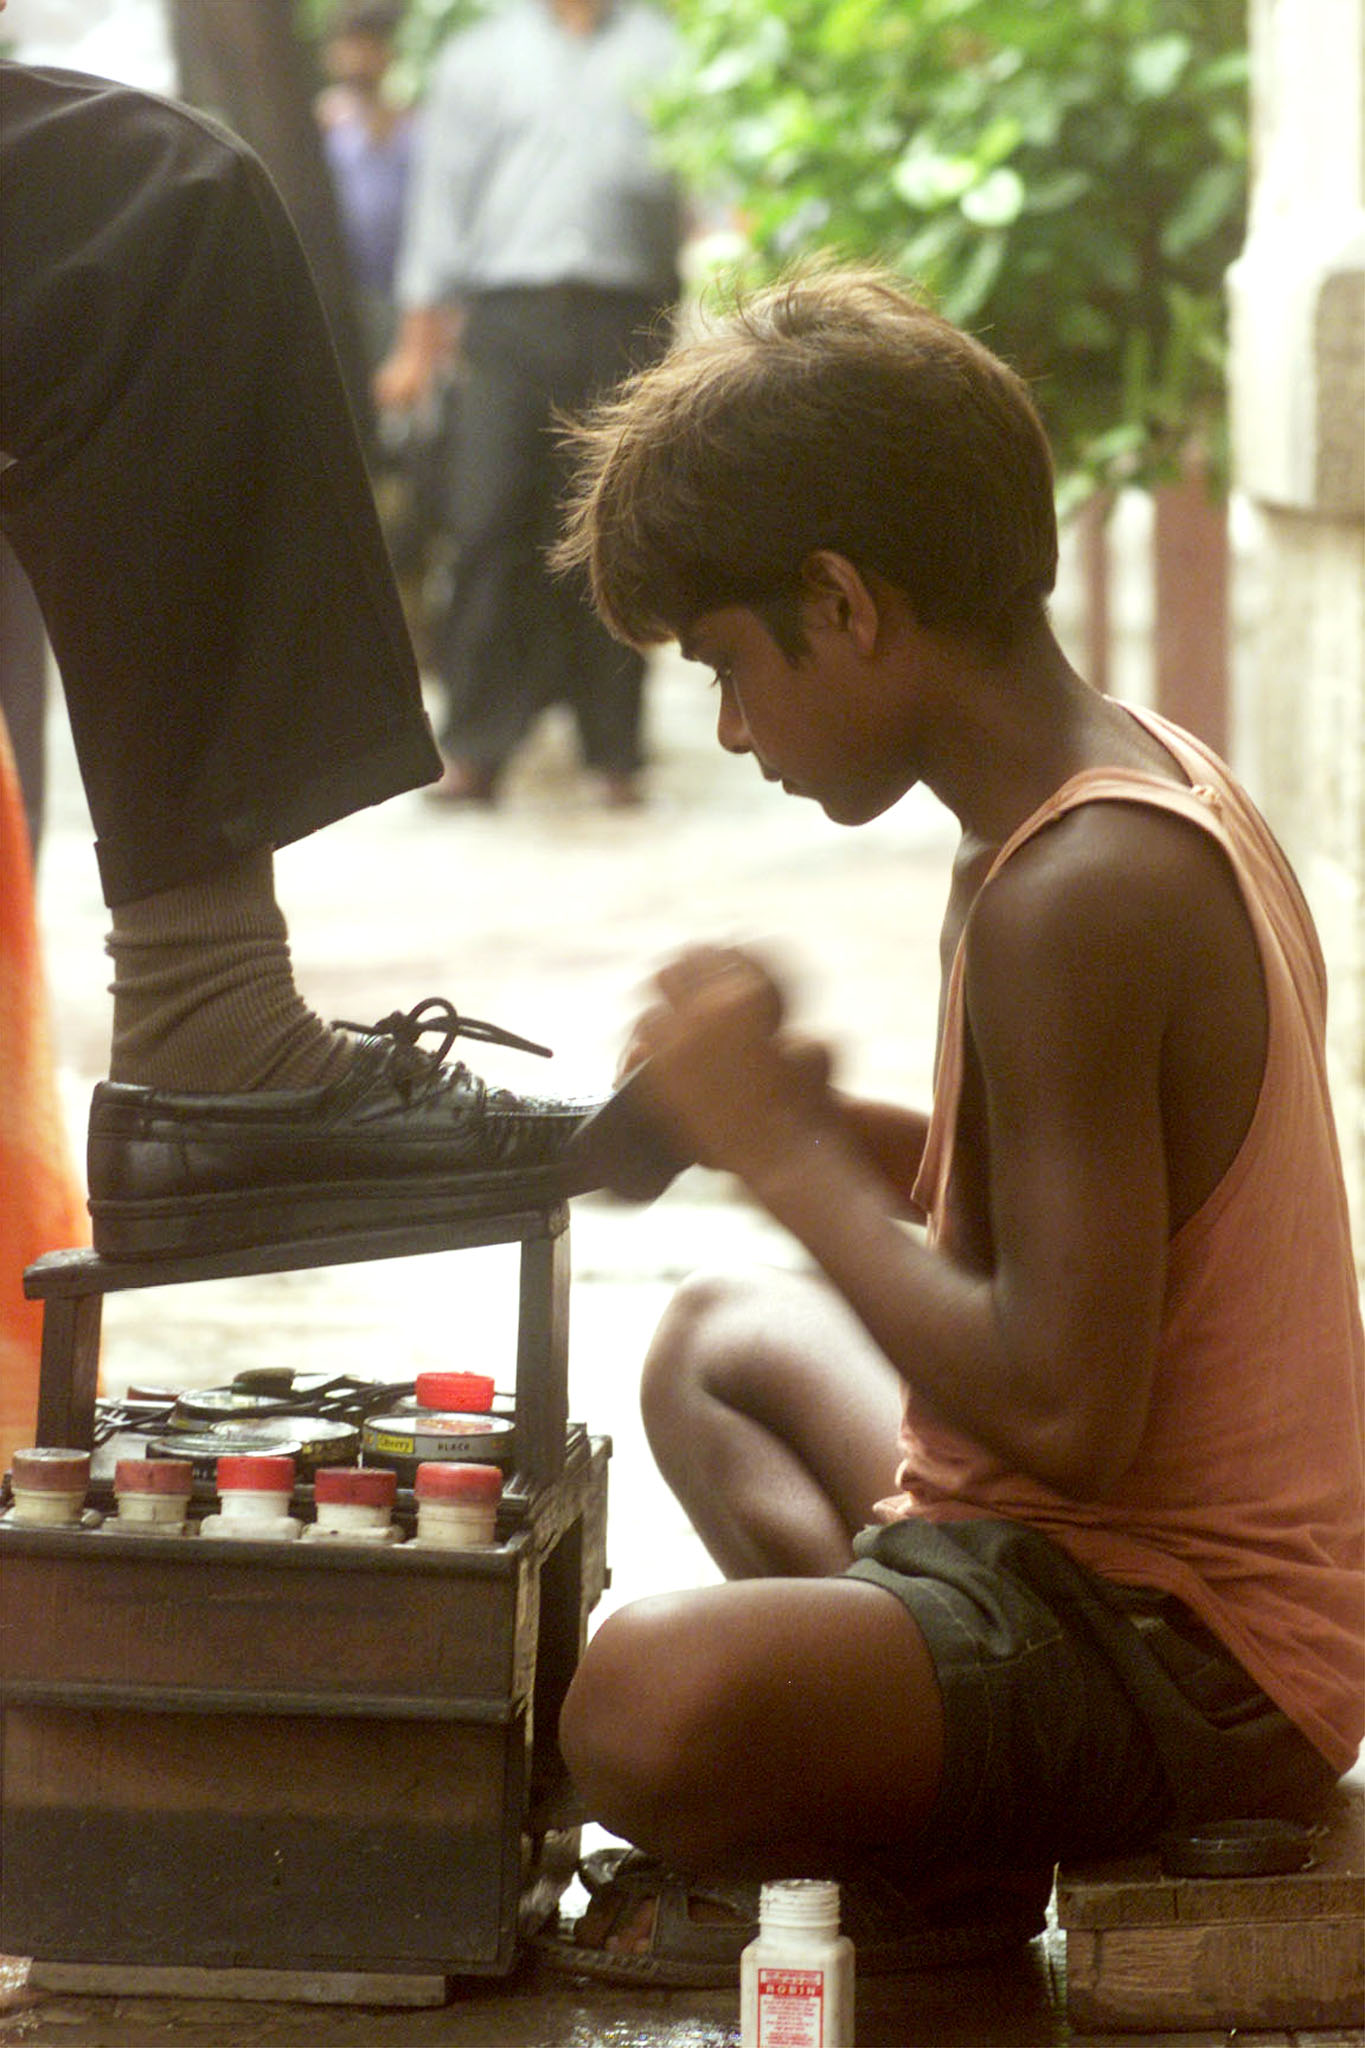 child-shoe-polish-india-child-labour.jpg